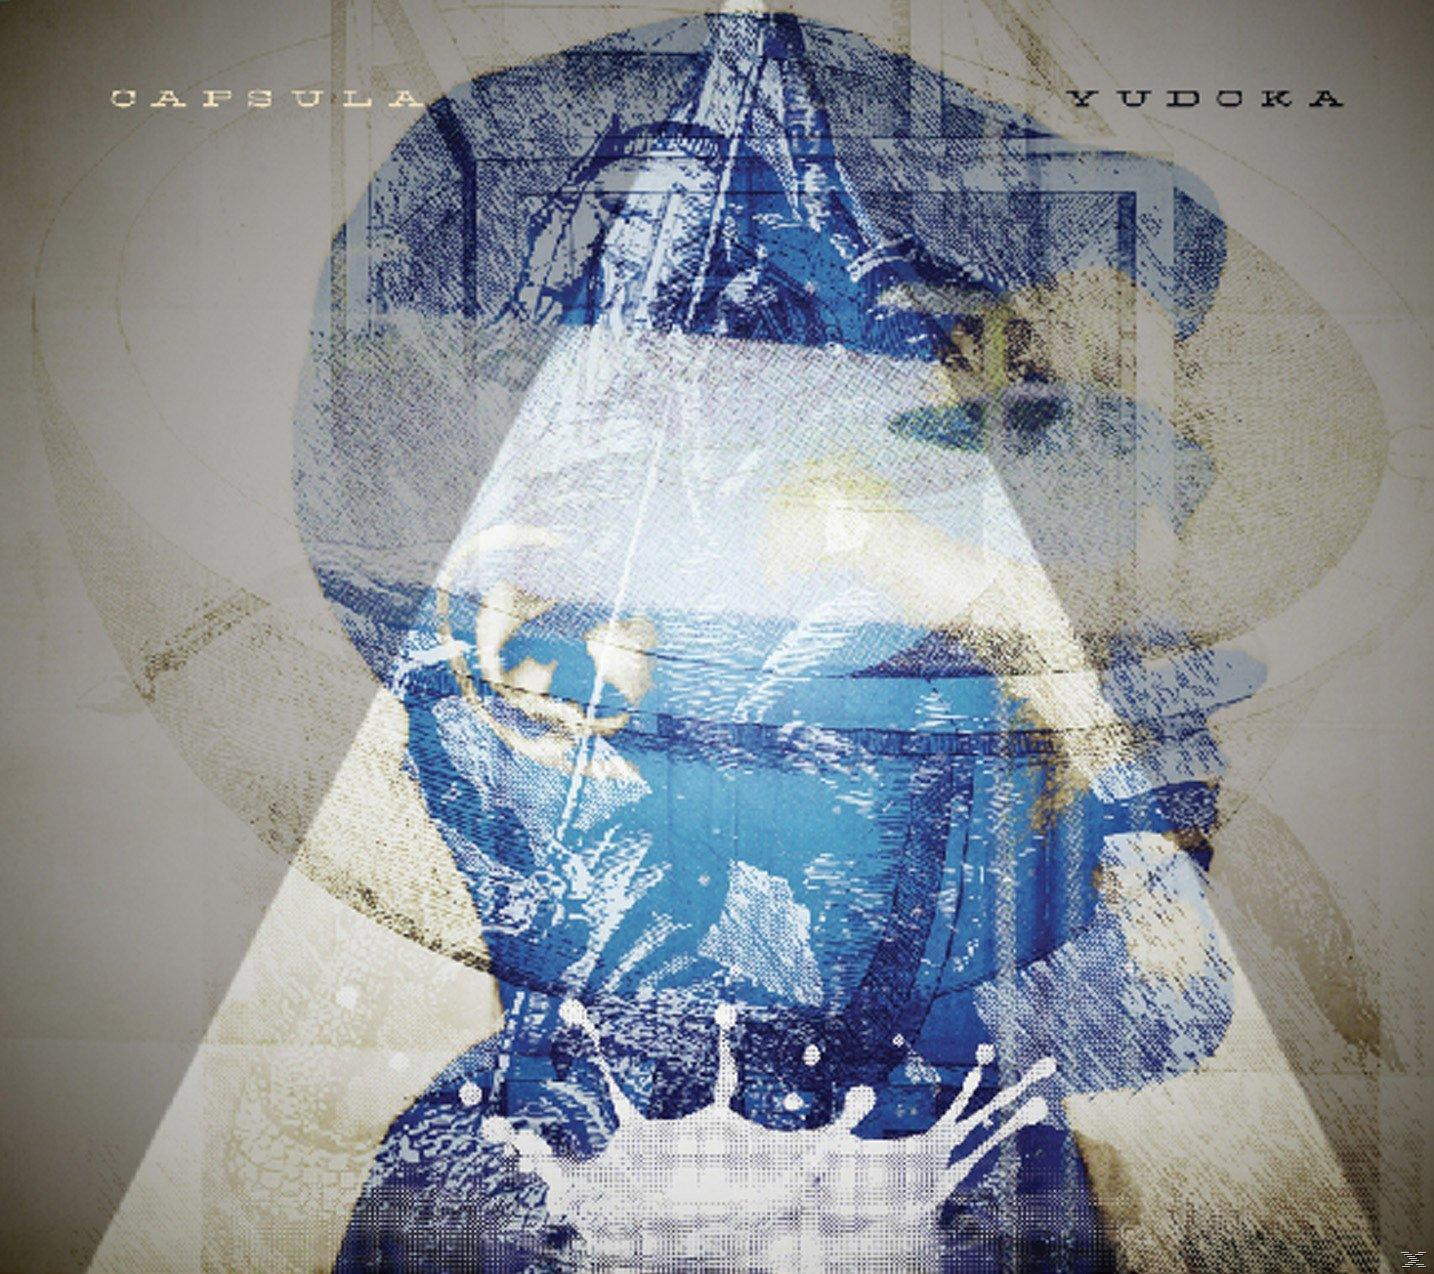 Capsula - Yudoka (Vinyl) 